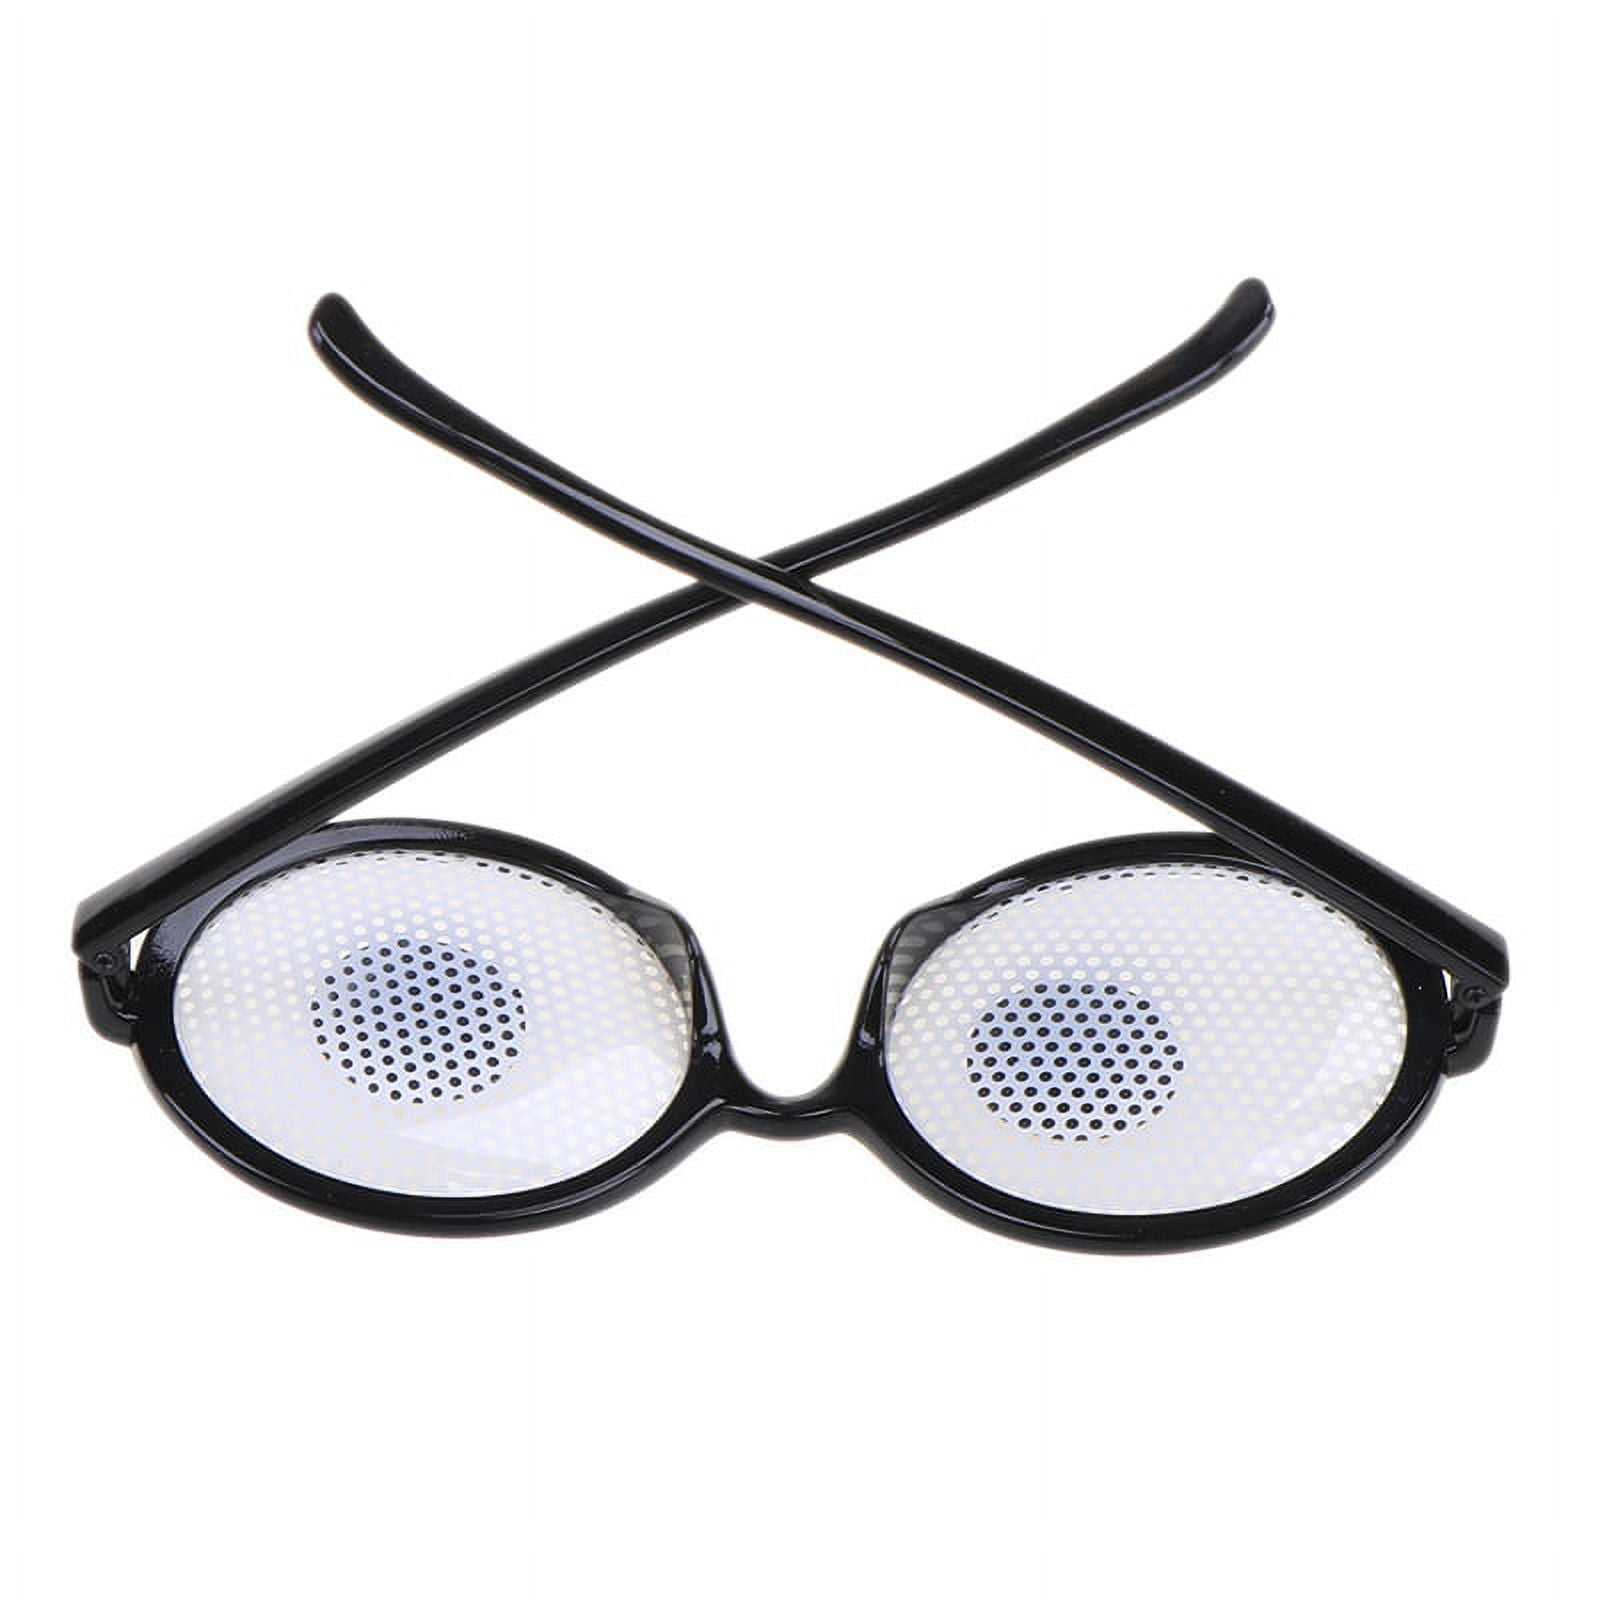 dodococa Googly Eyes Glasses Funny Shaking Costume Eye Glasses Novelty  Shades Giant Googly Glasses for Adults Kids